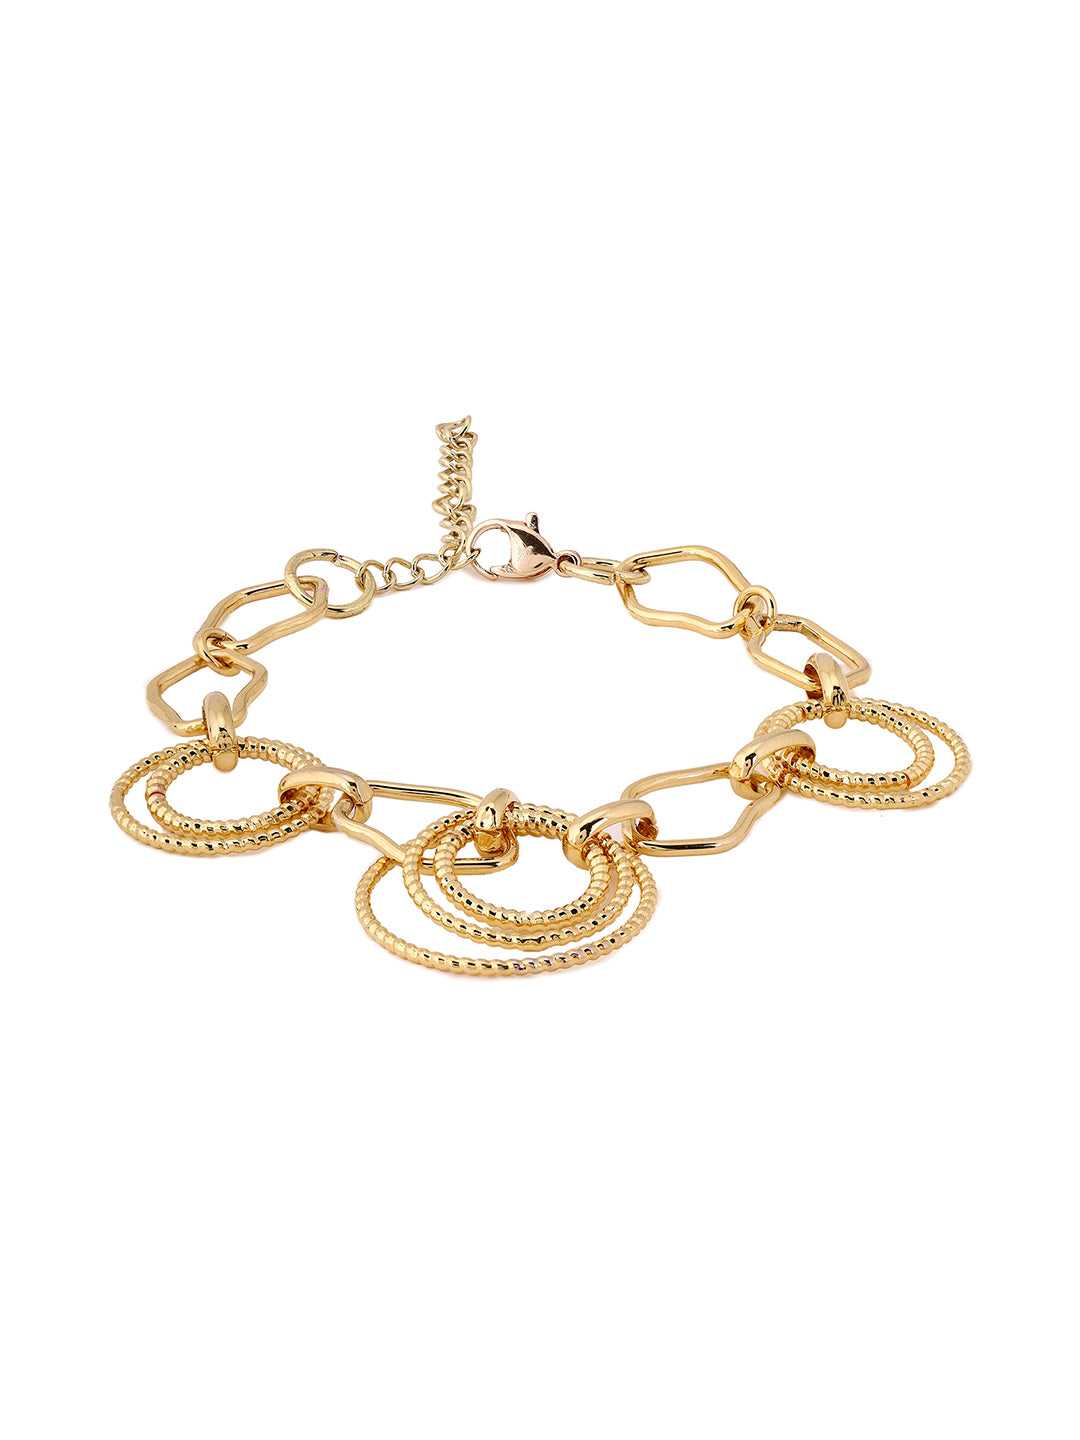 Prita Circle Links Chain Gold Plated Bracelet